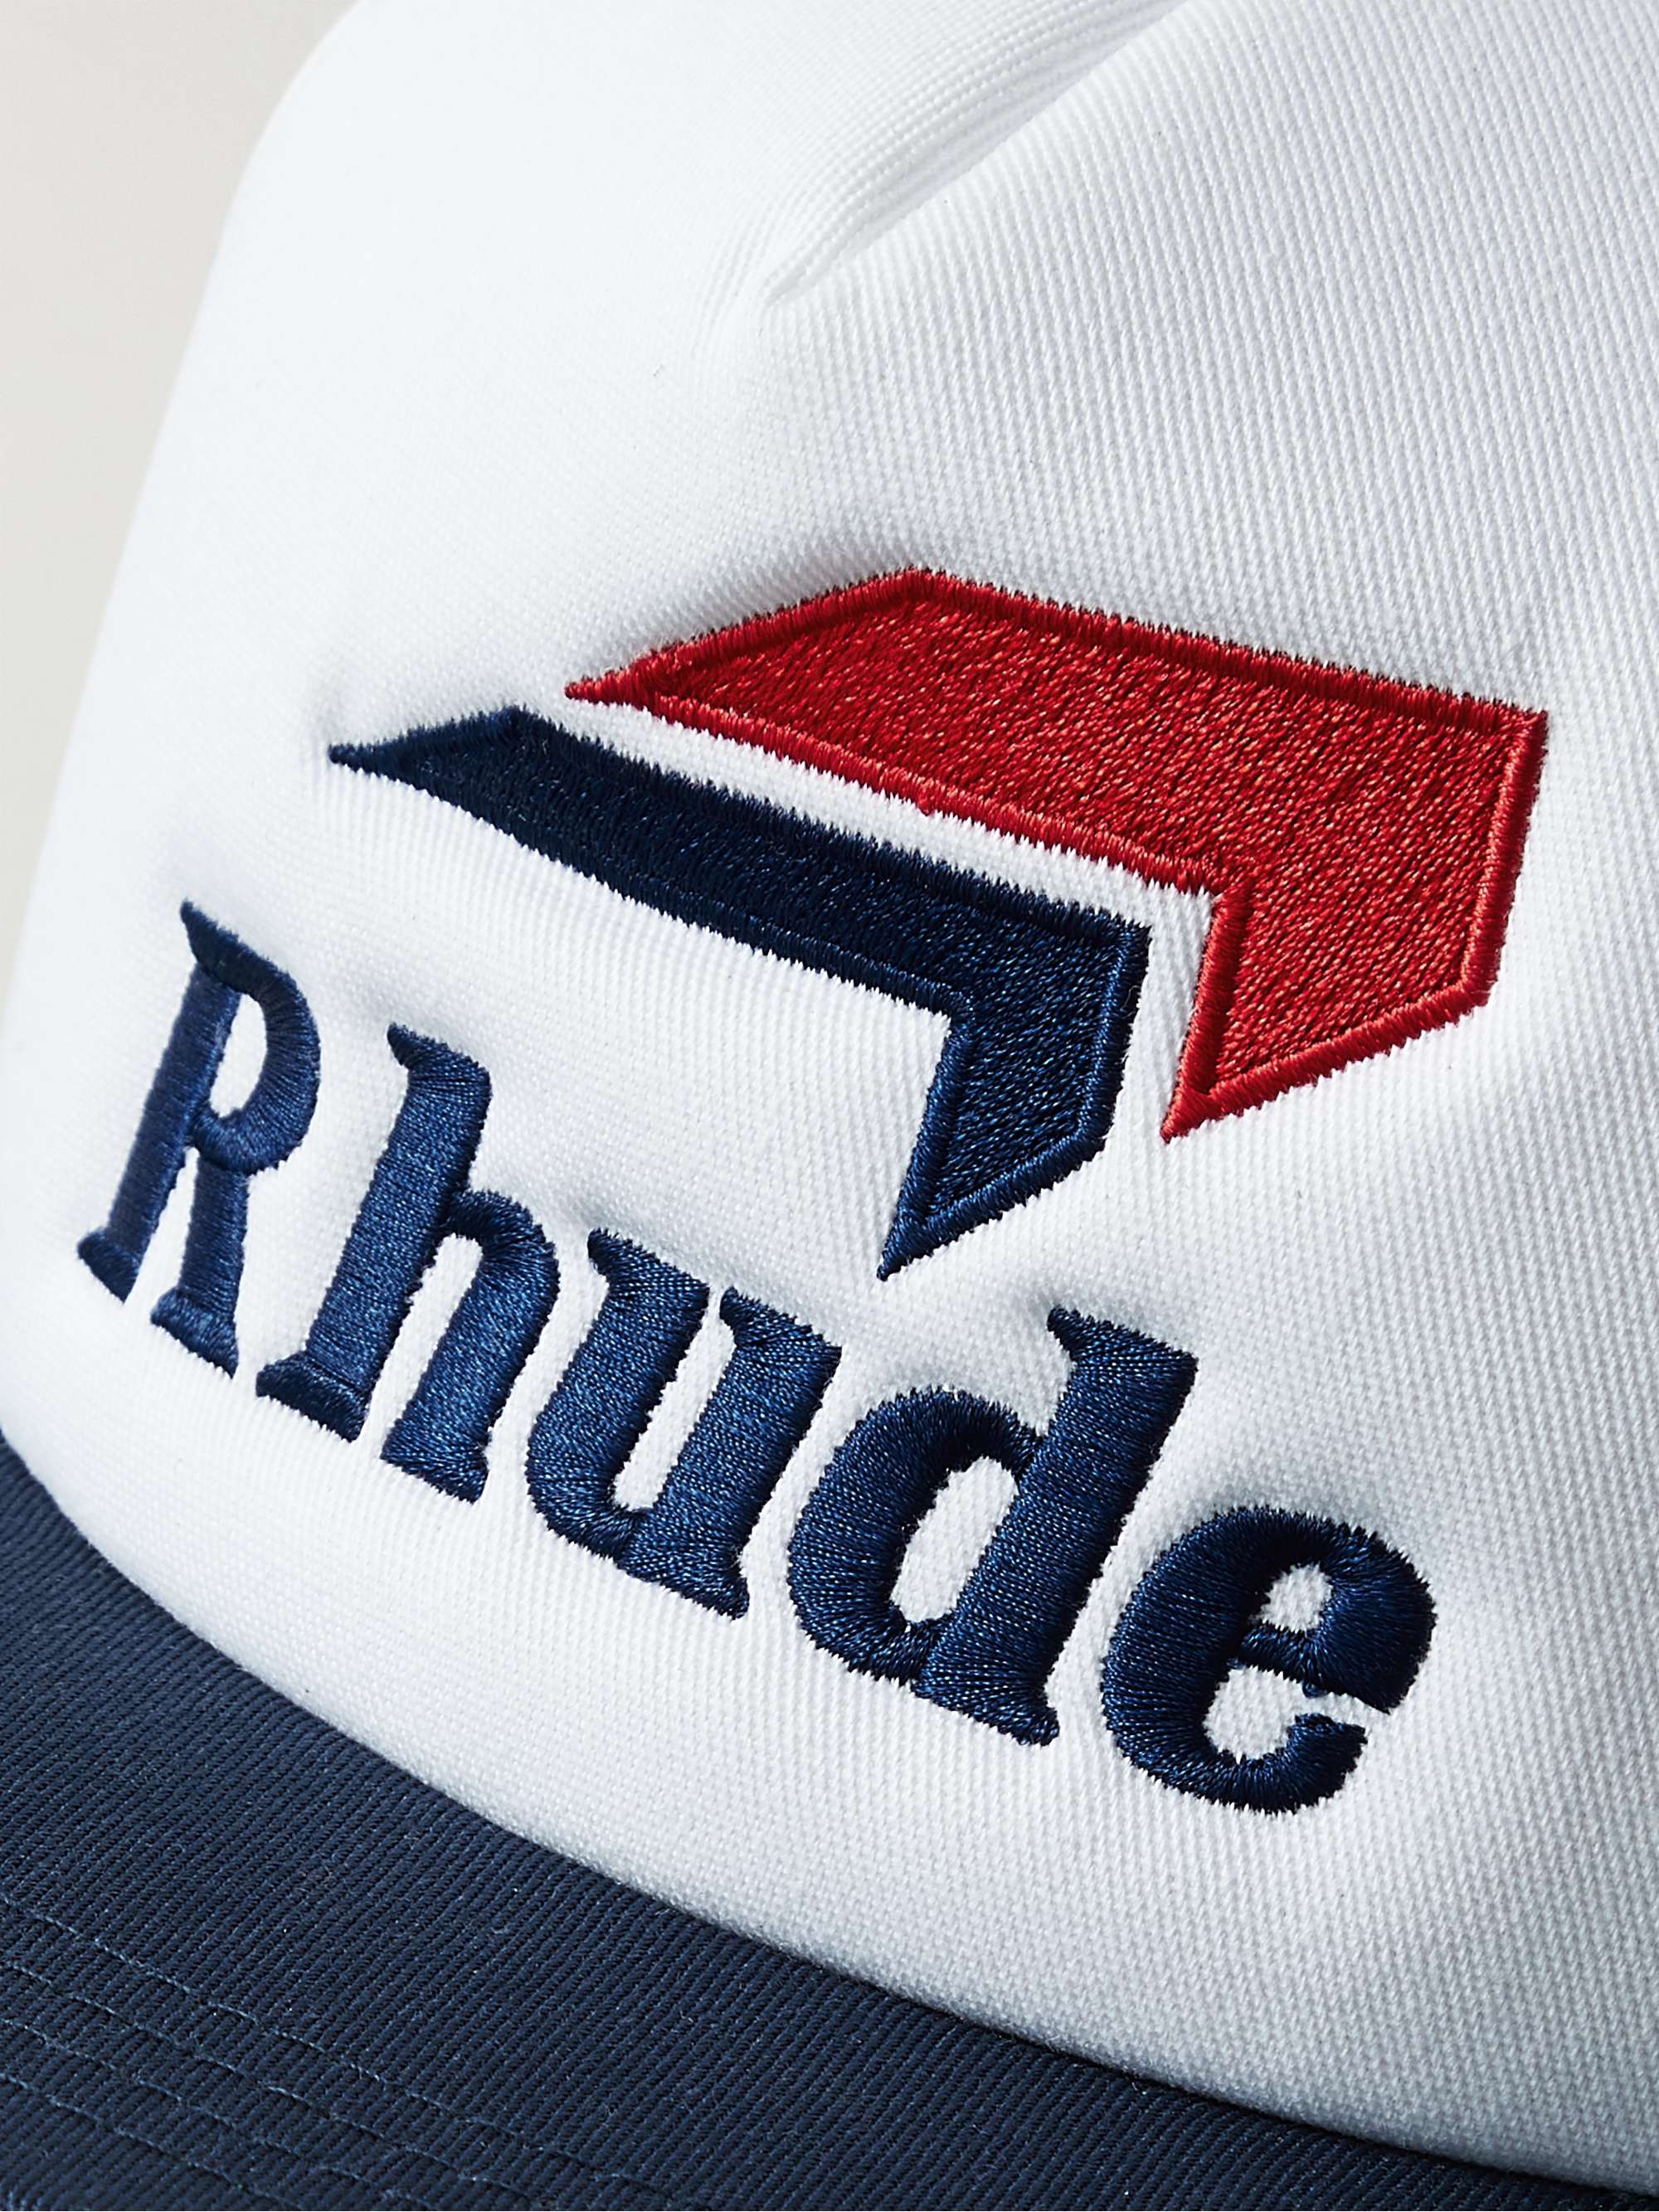 RHUDE Speedmark Logo-Embroidered Twill and Mesh Trucker Cap